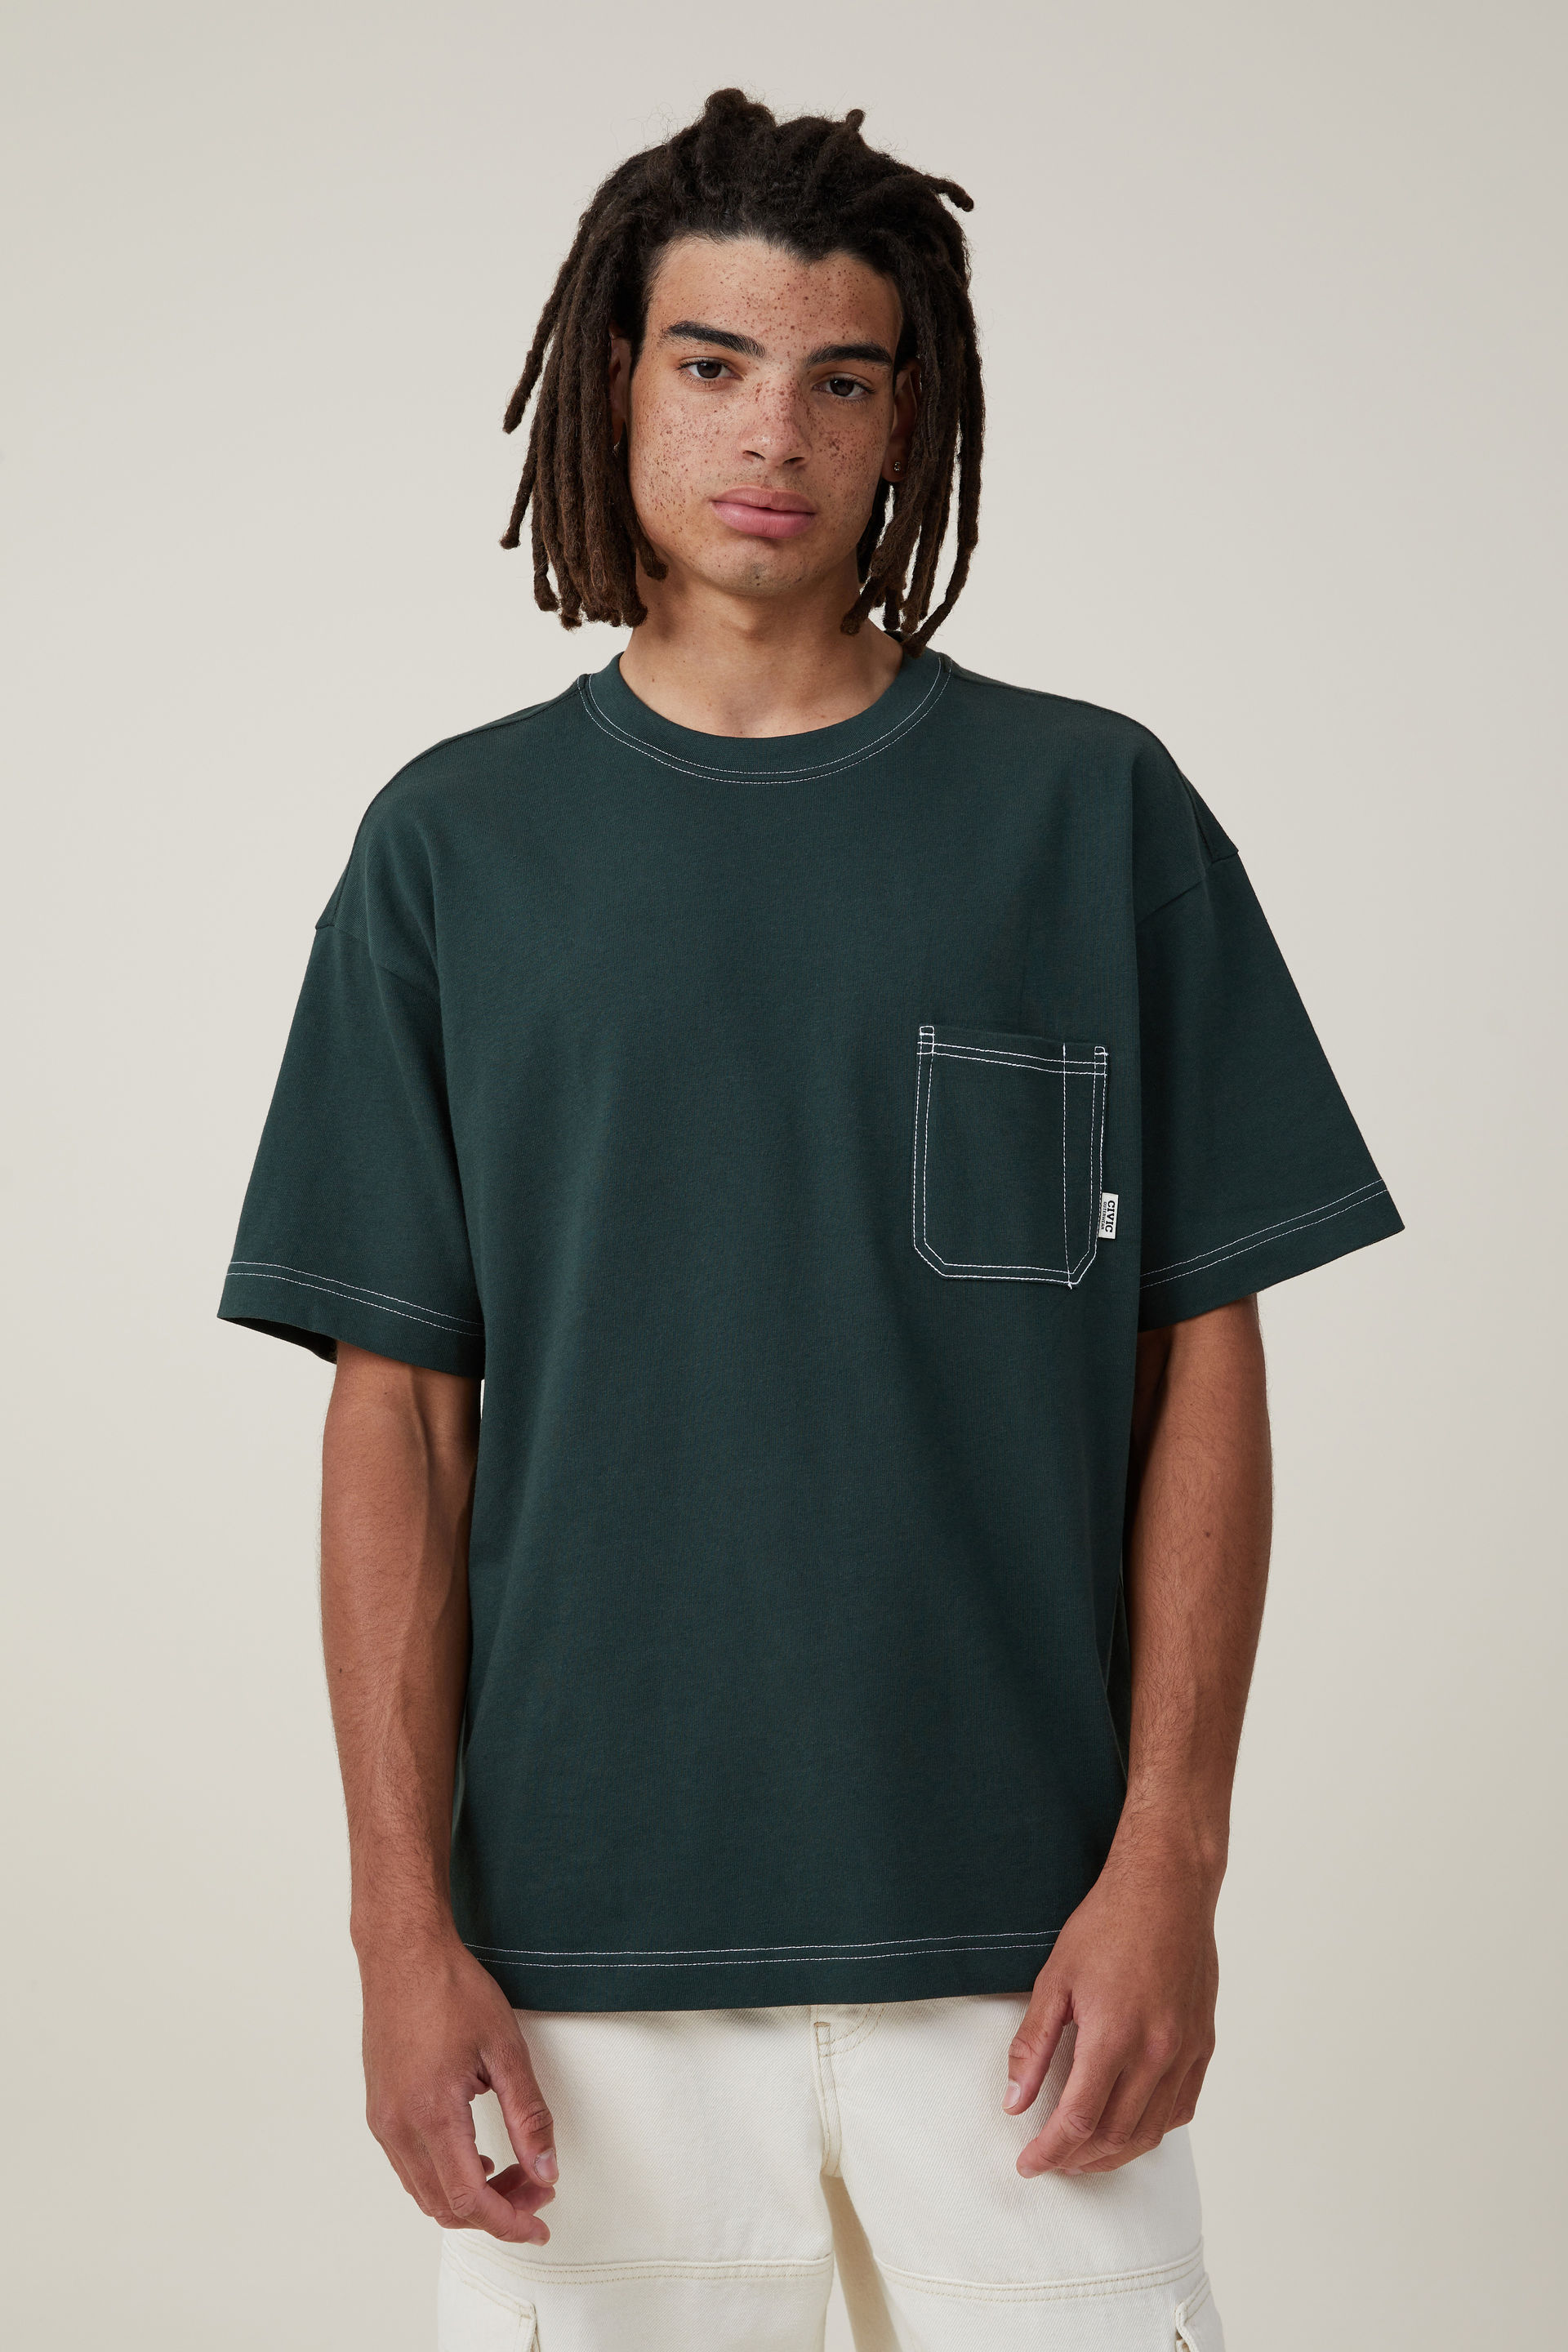 Cotton On Men - Box Fit Pocket T-Shirt - Pineneedle green / civic contrast